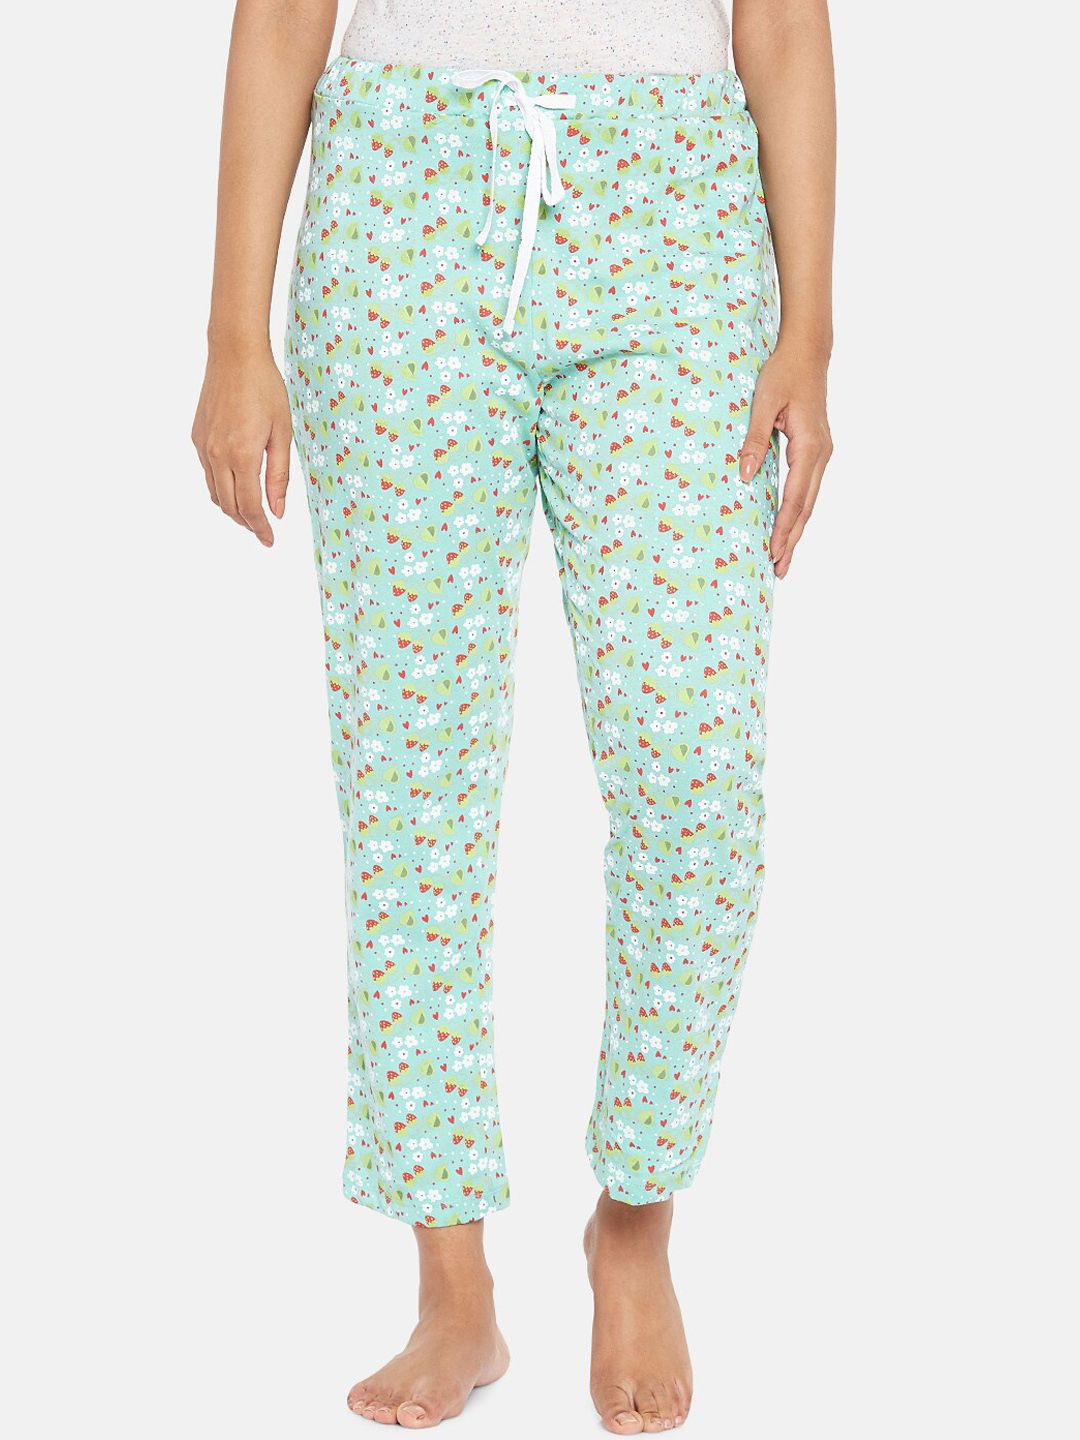 People Women White & Green Printed Pyjamas Price in India